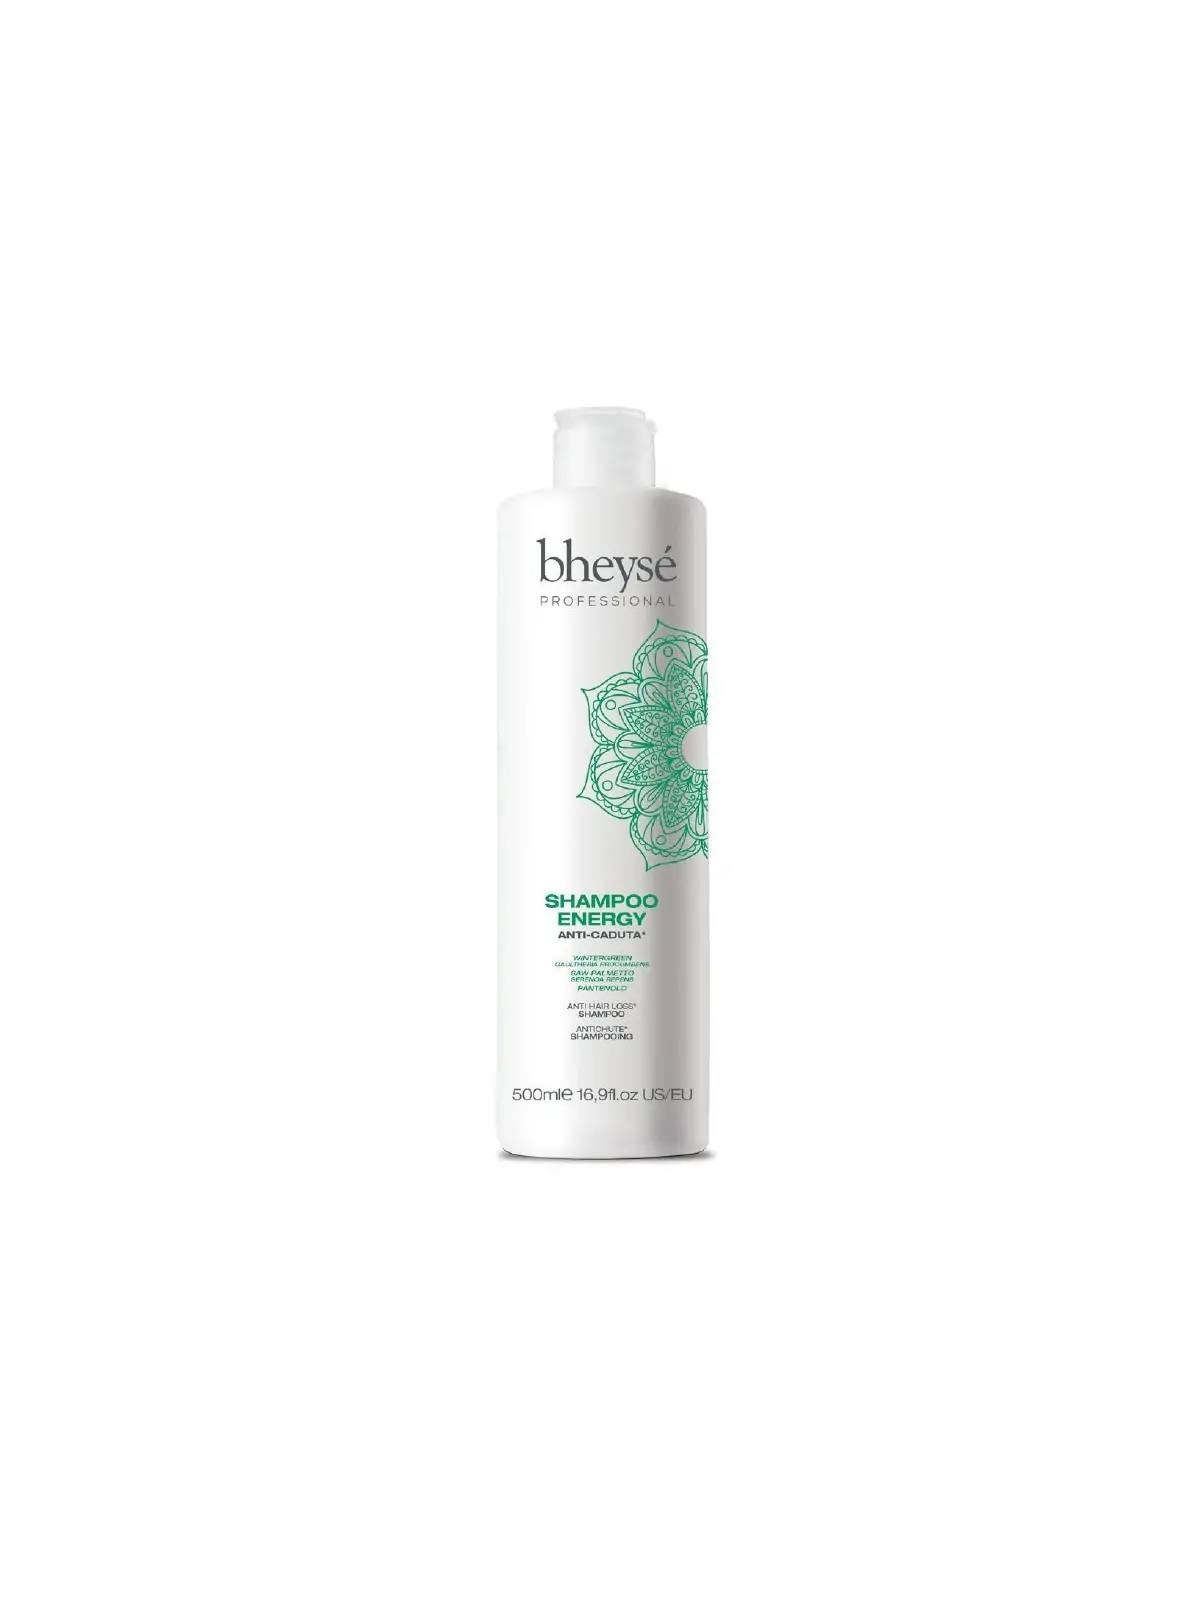 Bheysè Shampoo energy 500 ml 6,40 € -20%